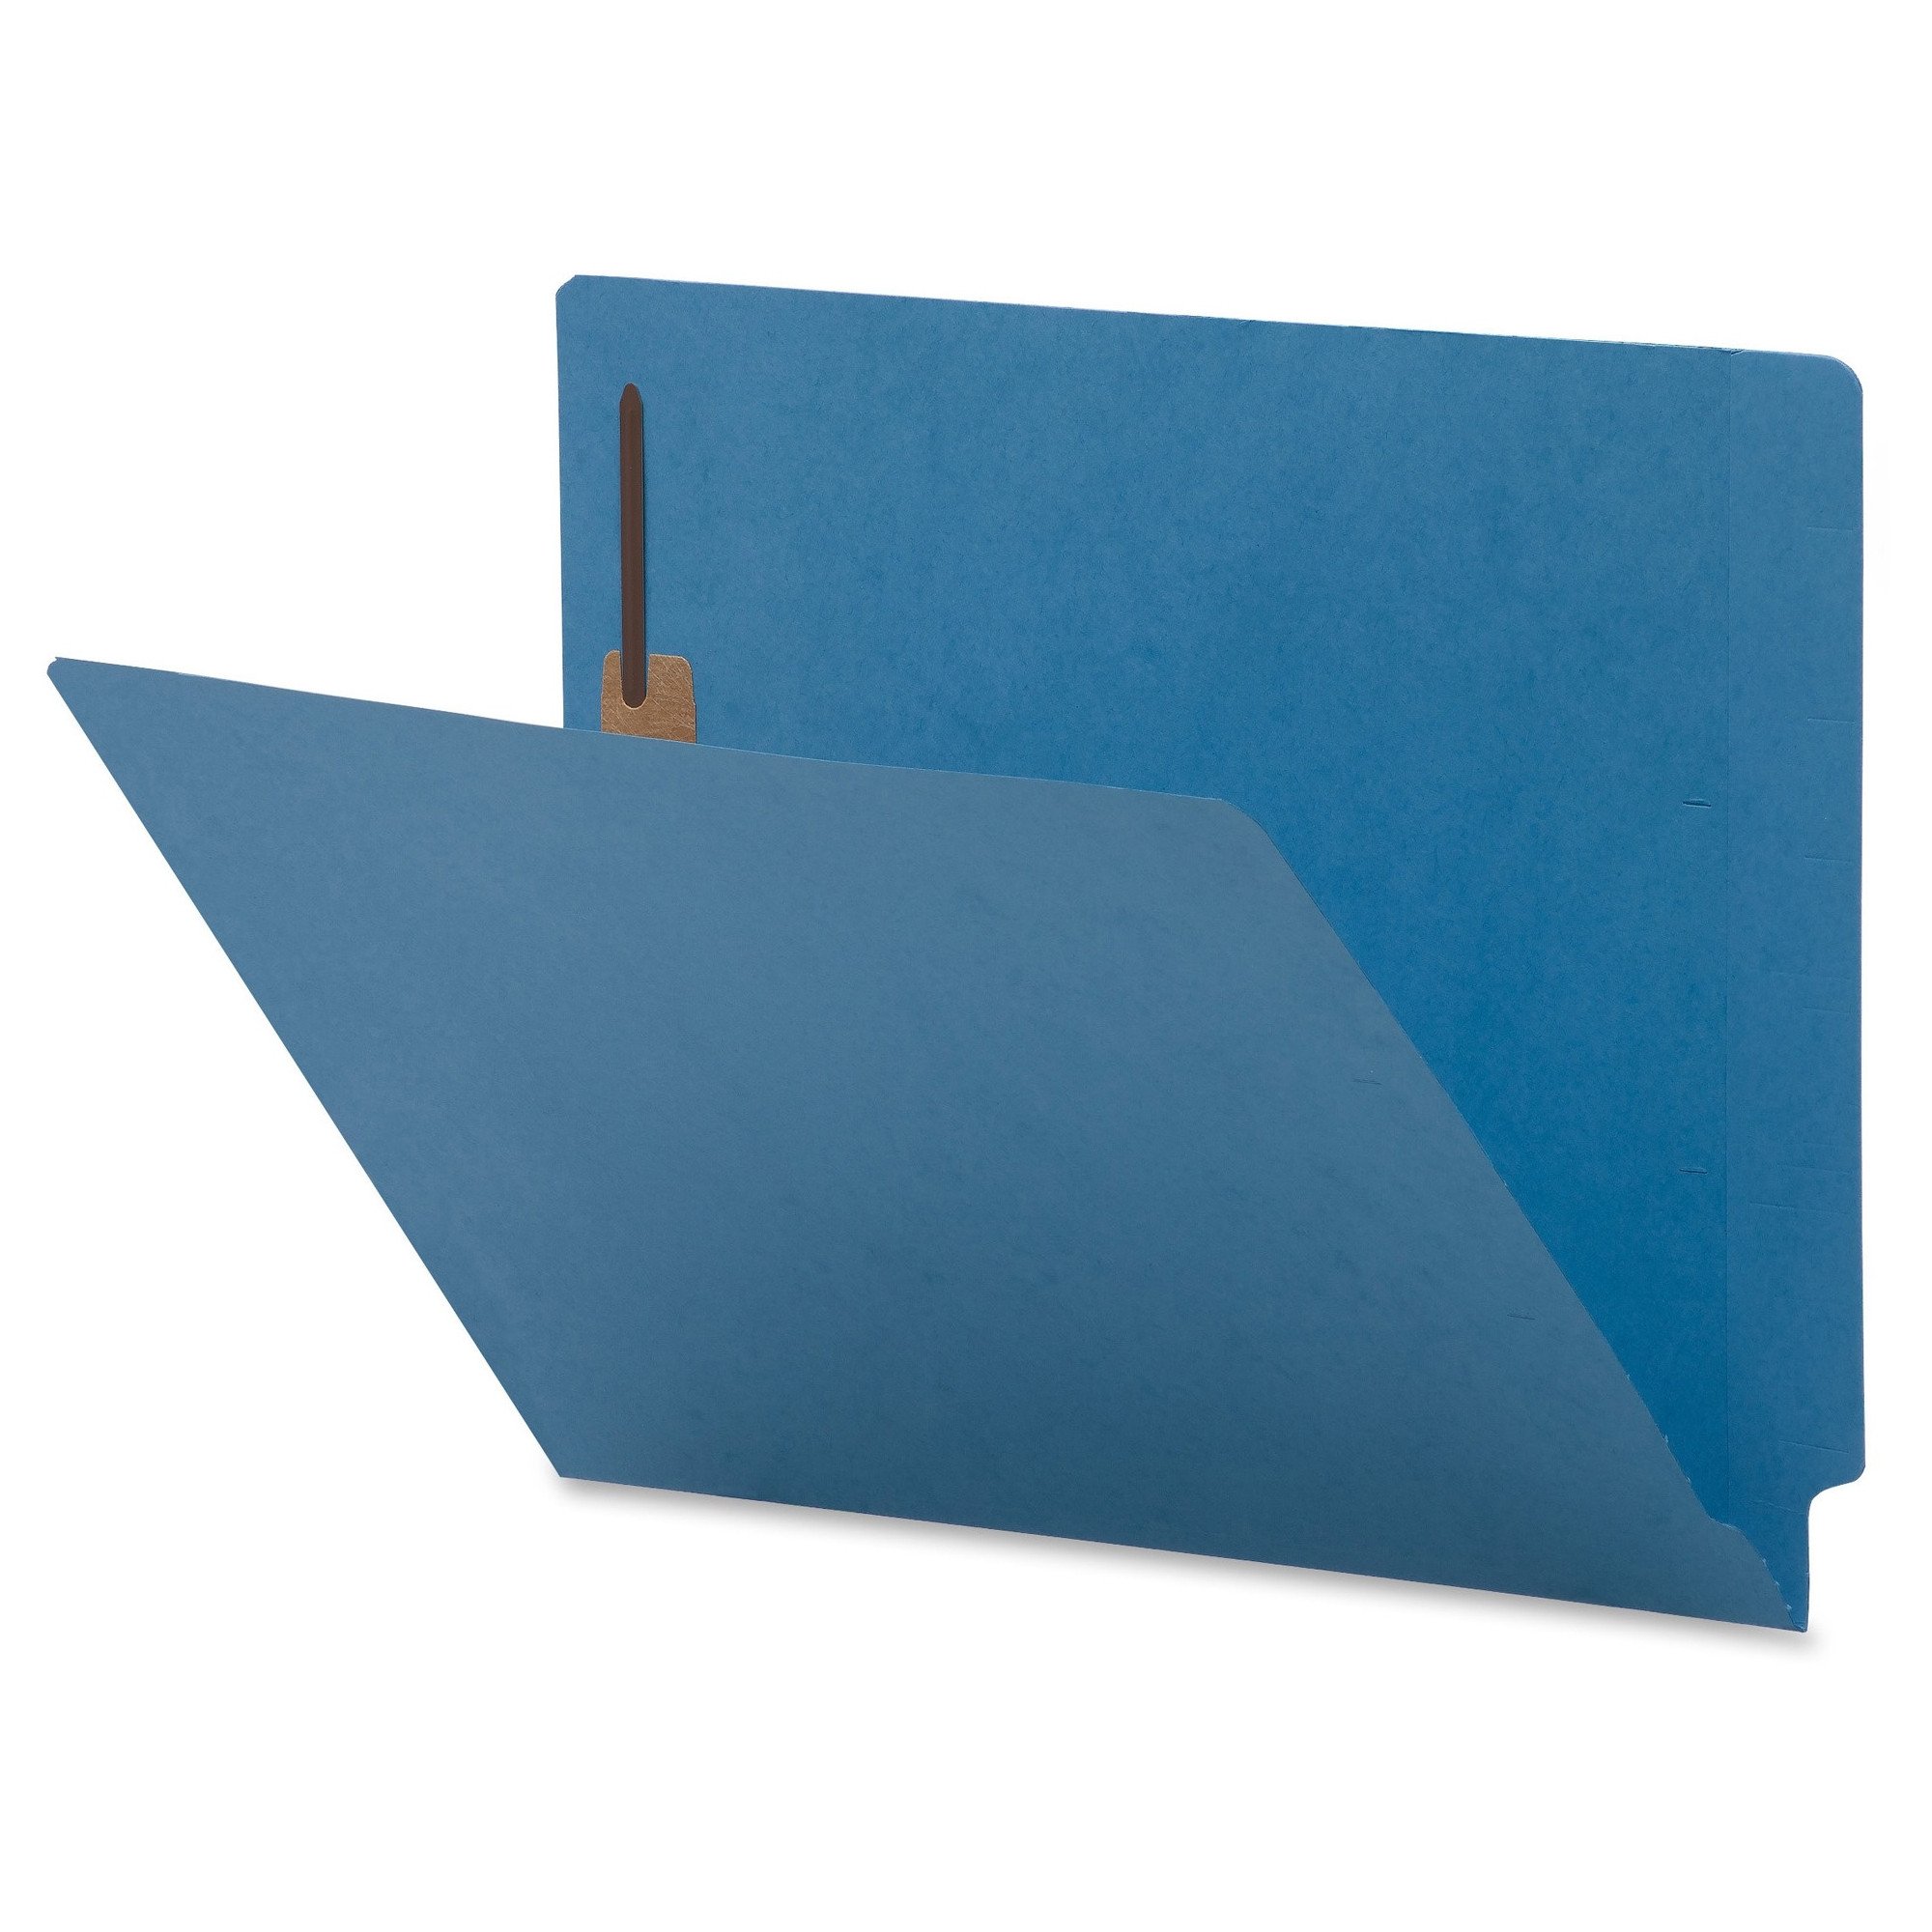 Sparco Blue Colored End Tab Fastener Folder